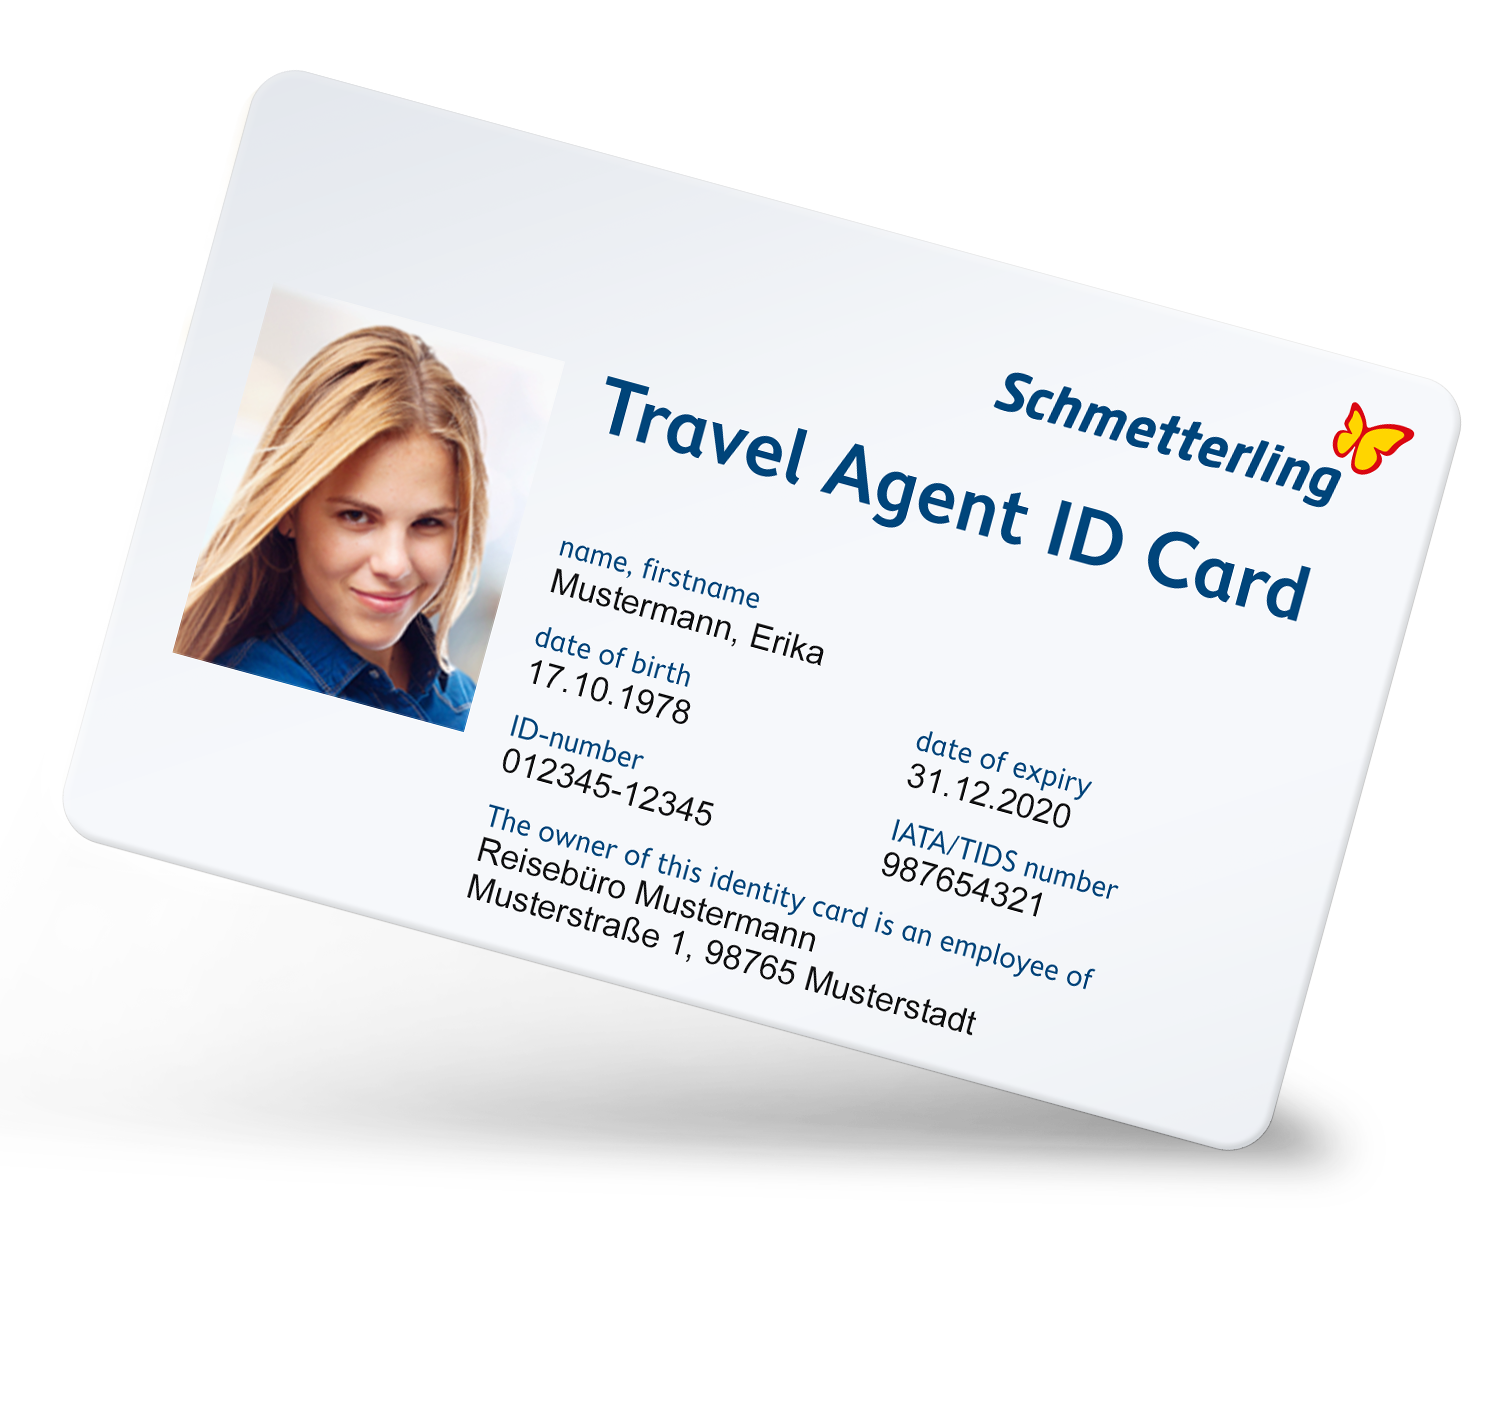 Travel Agent Cards Schmetterling International GmbH & Co. KG